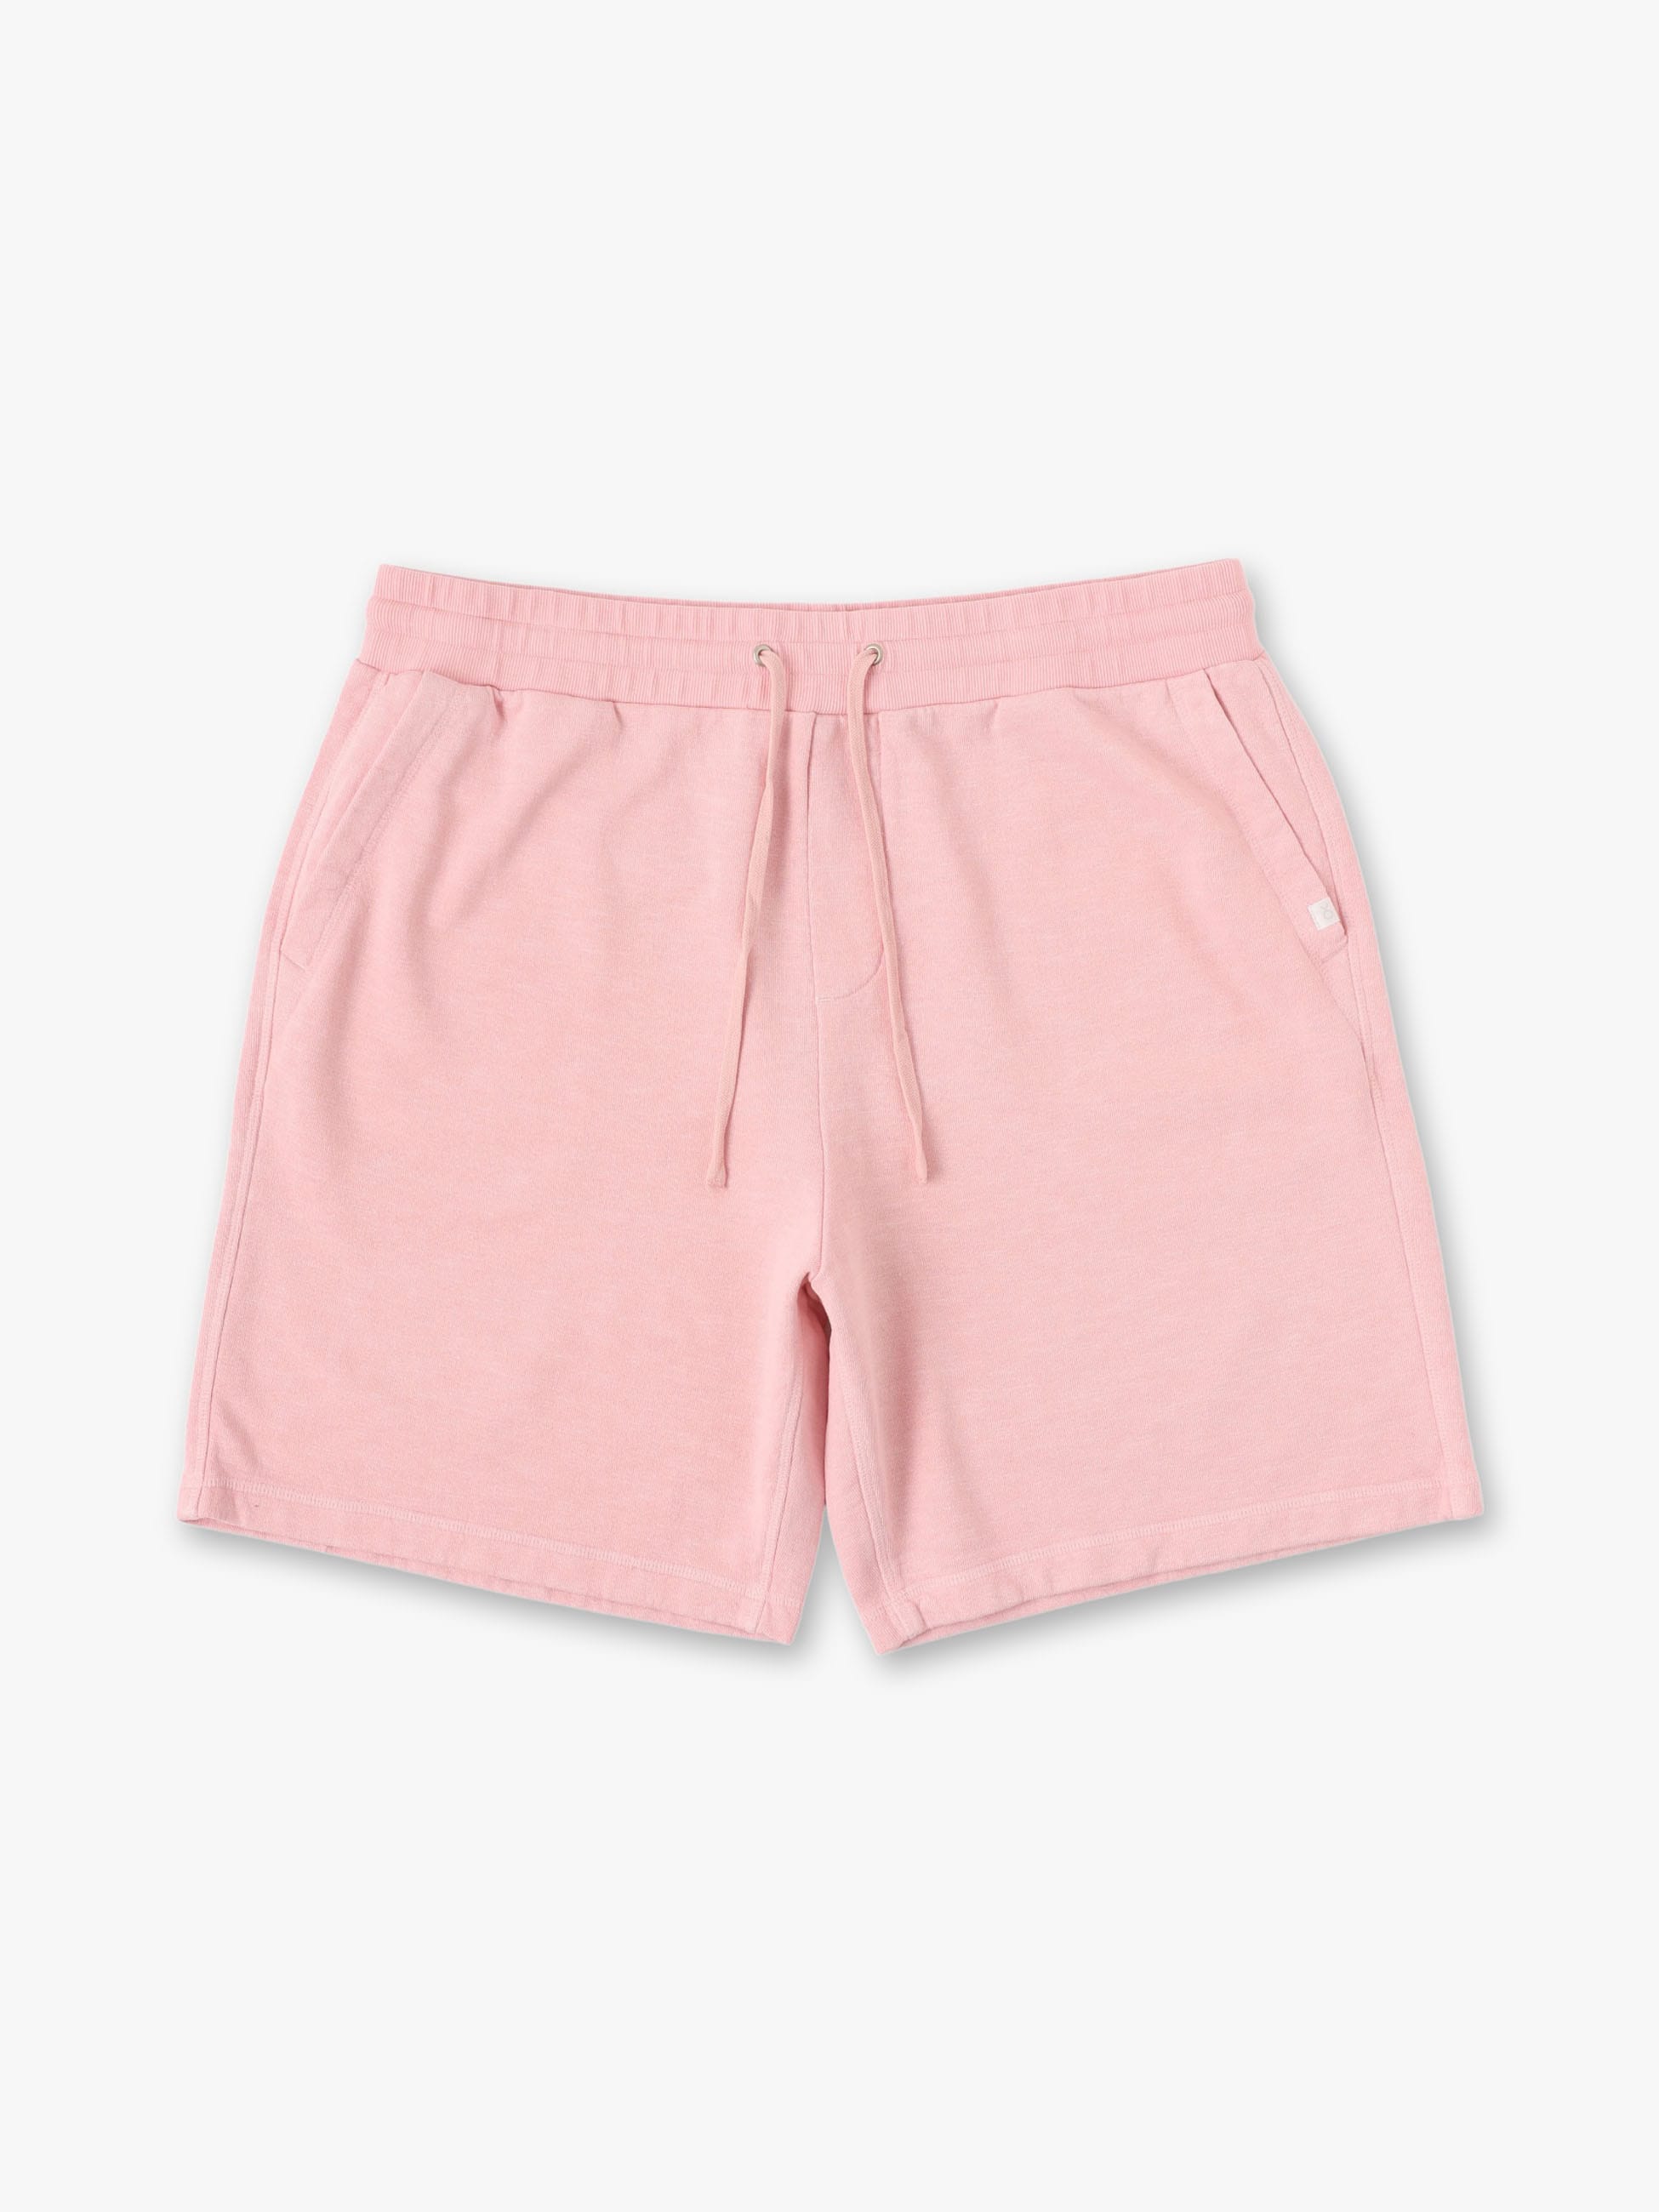 Sur Sweat Shorts 詳細画像 light pink 3